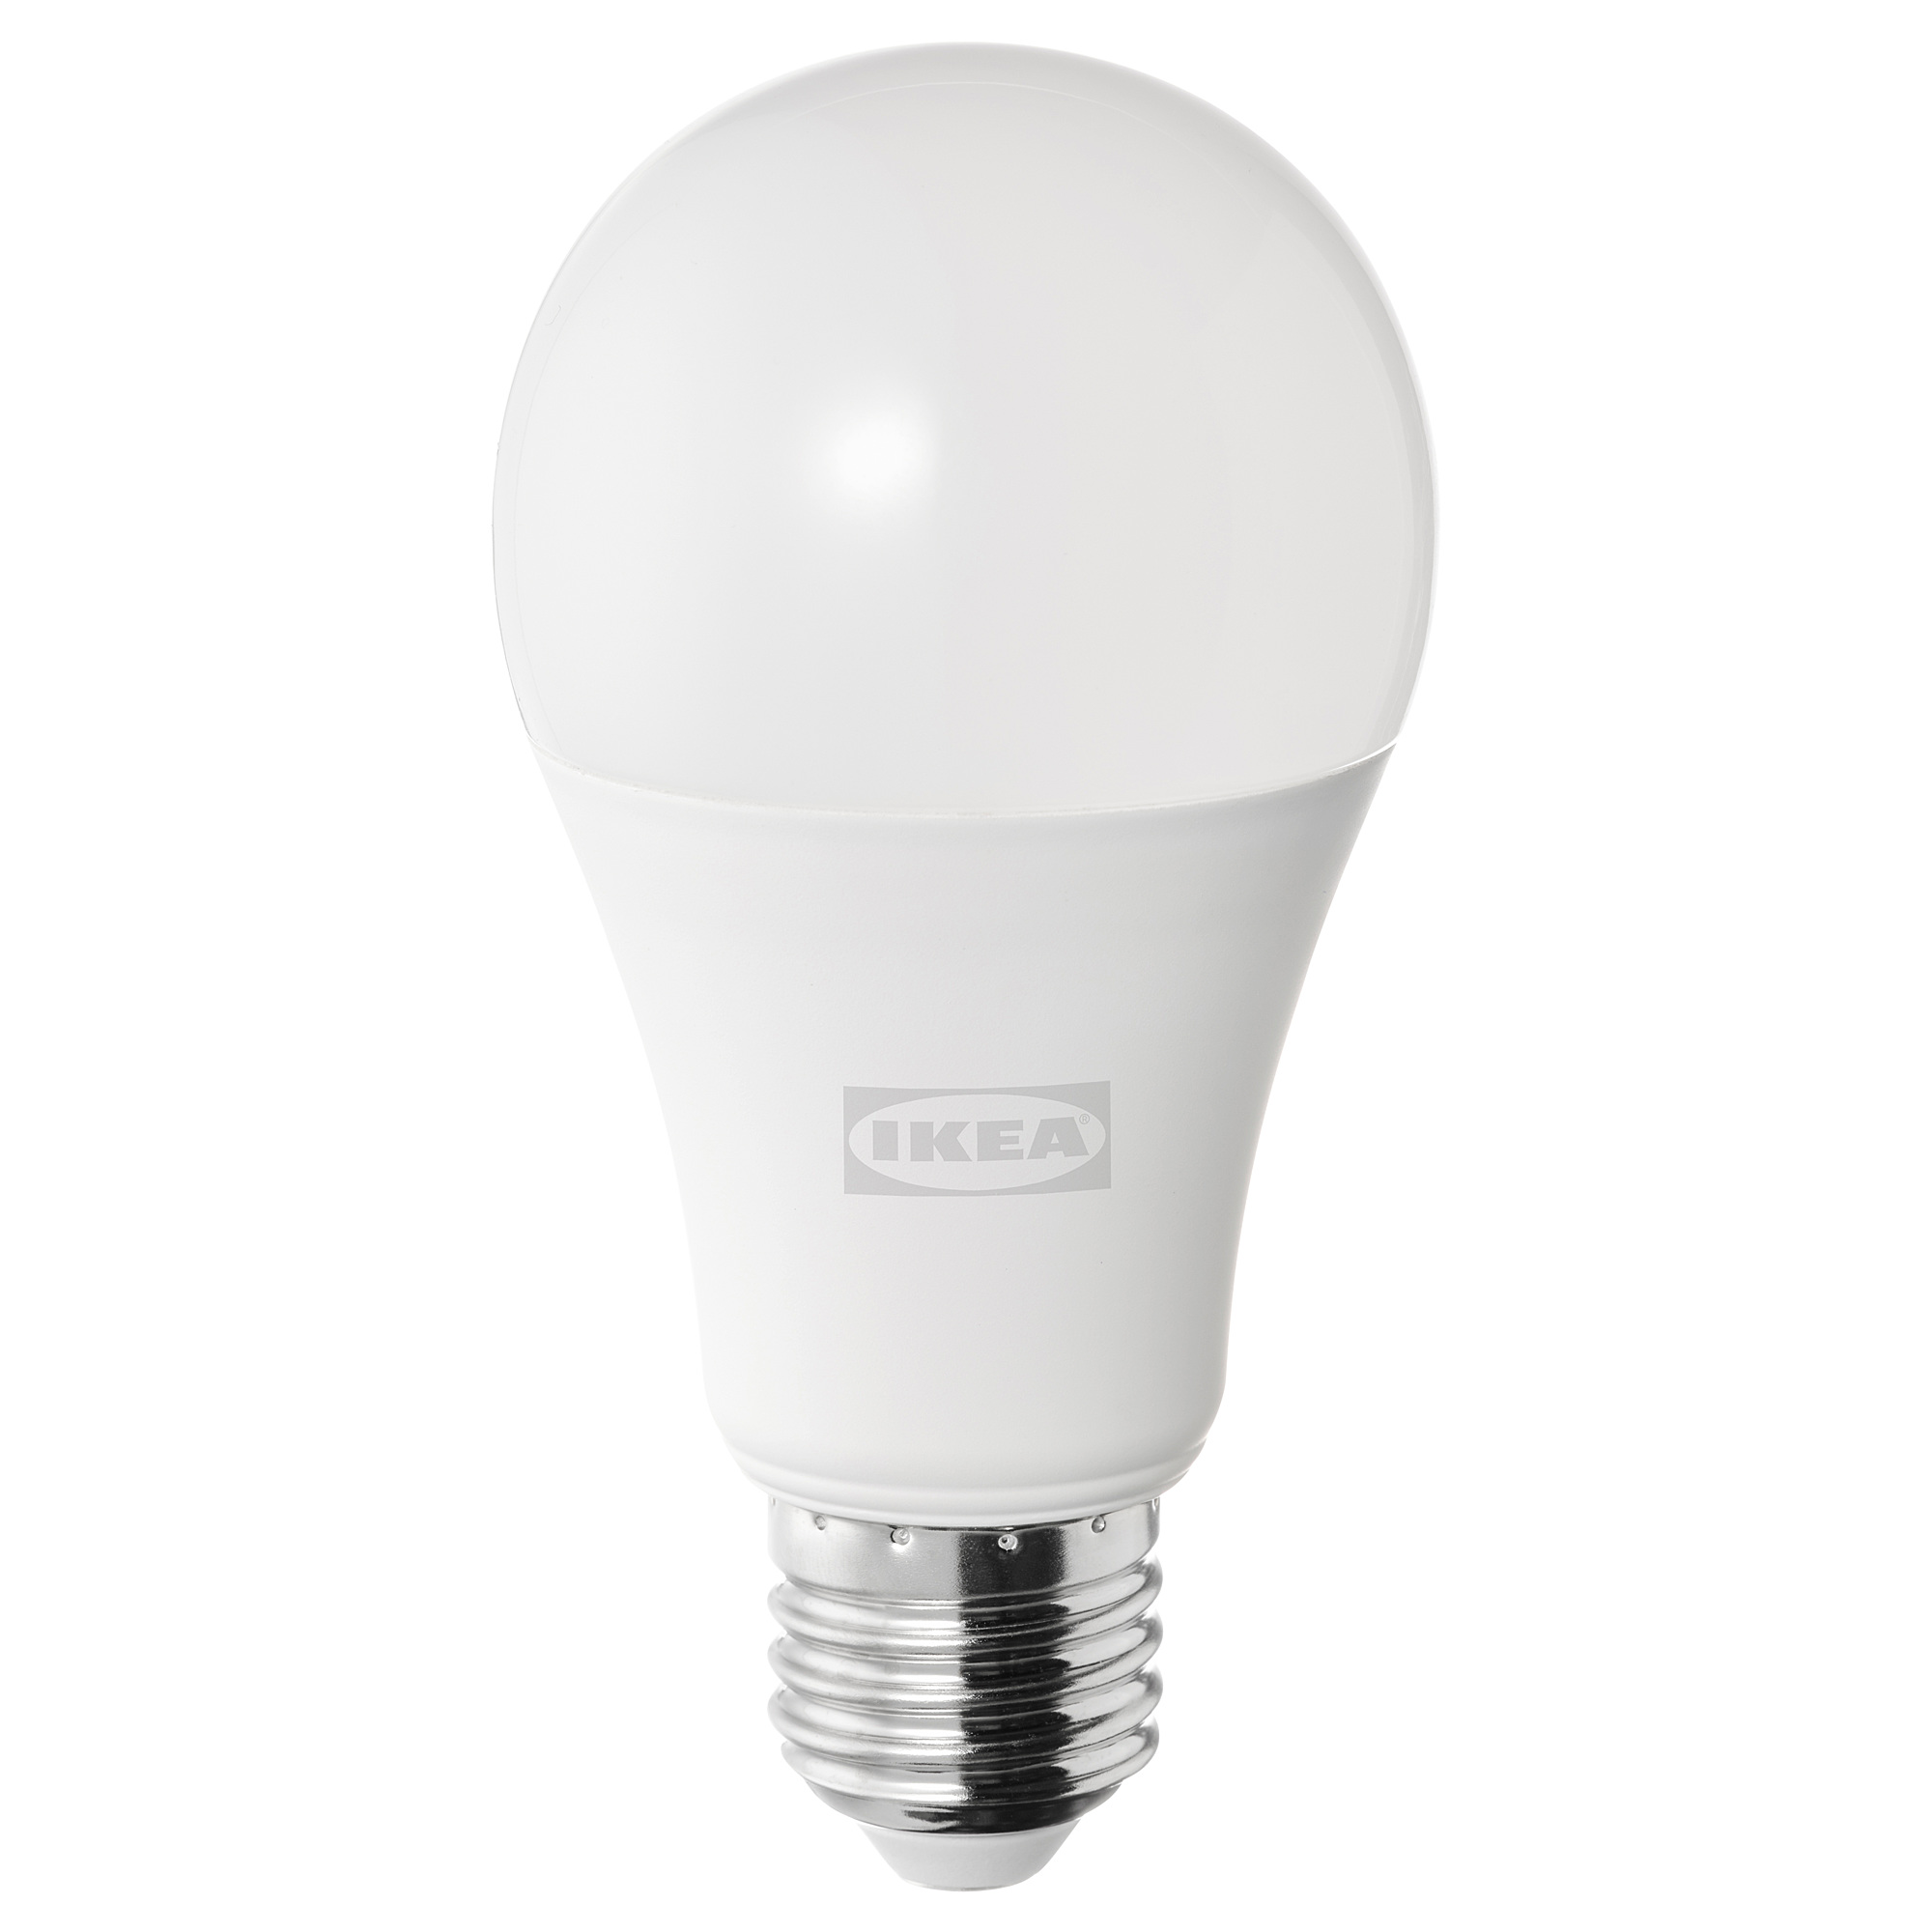 SOLHETTA LED bulb E27 1521 lumen